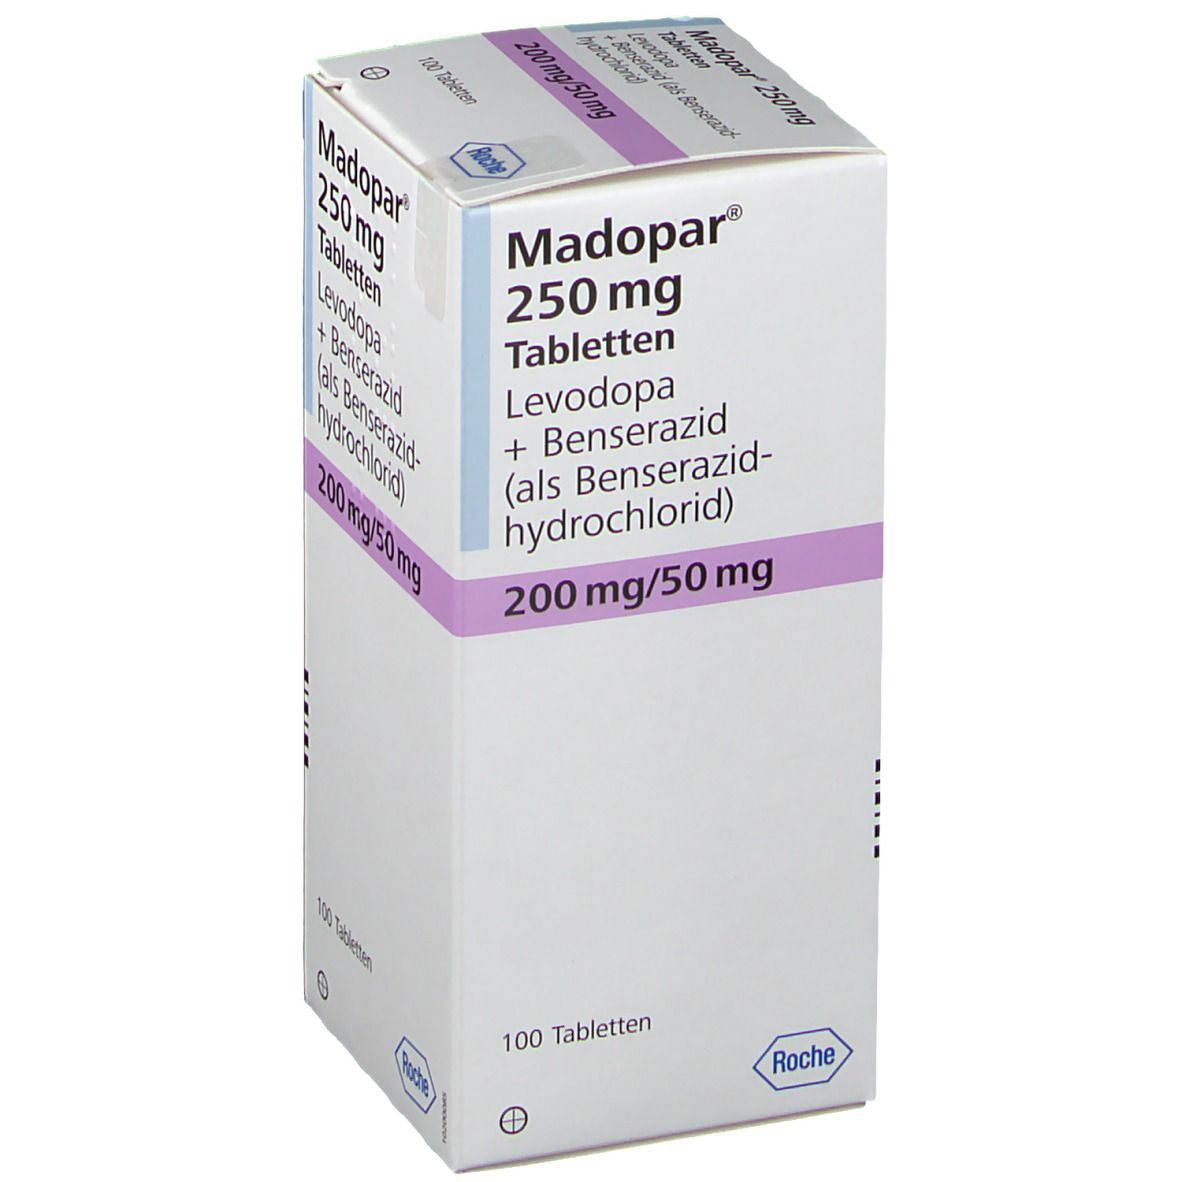 Madopar® 250 mg